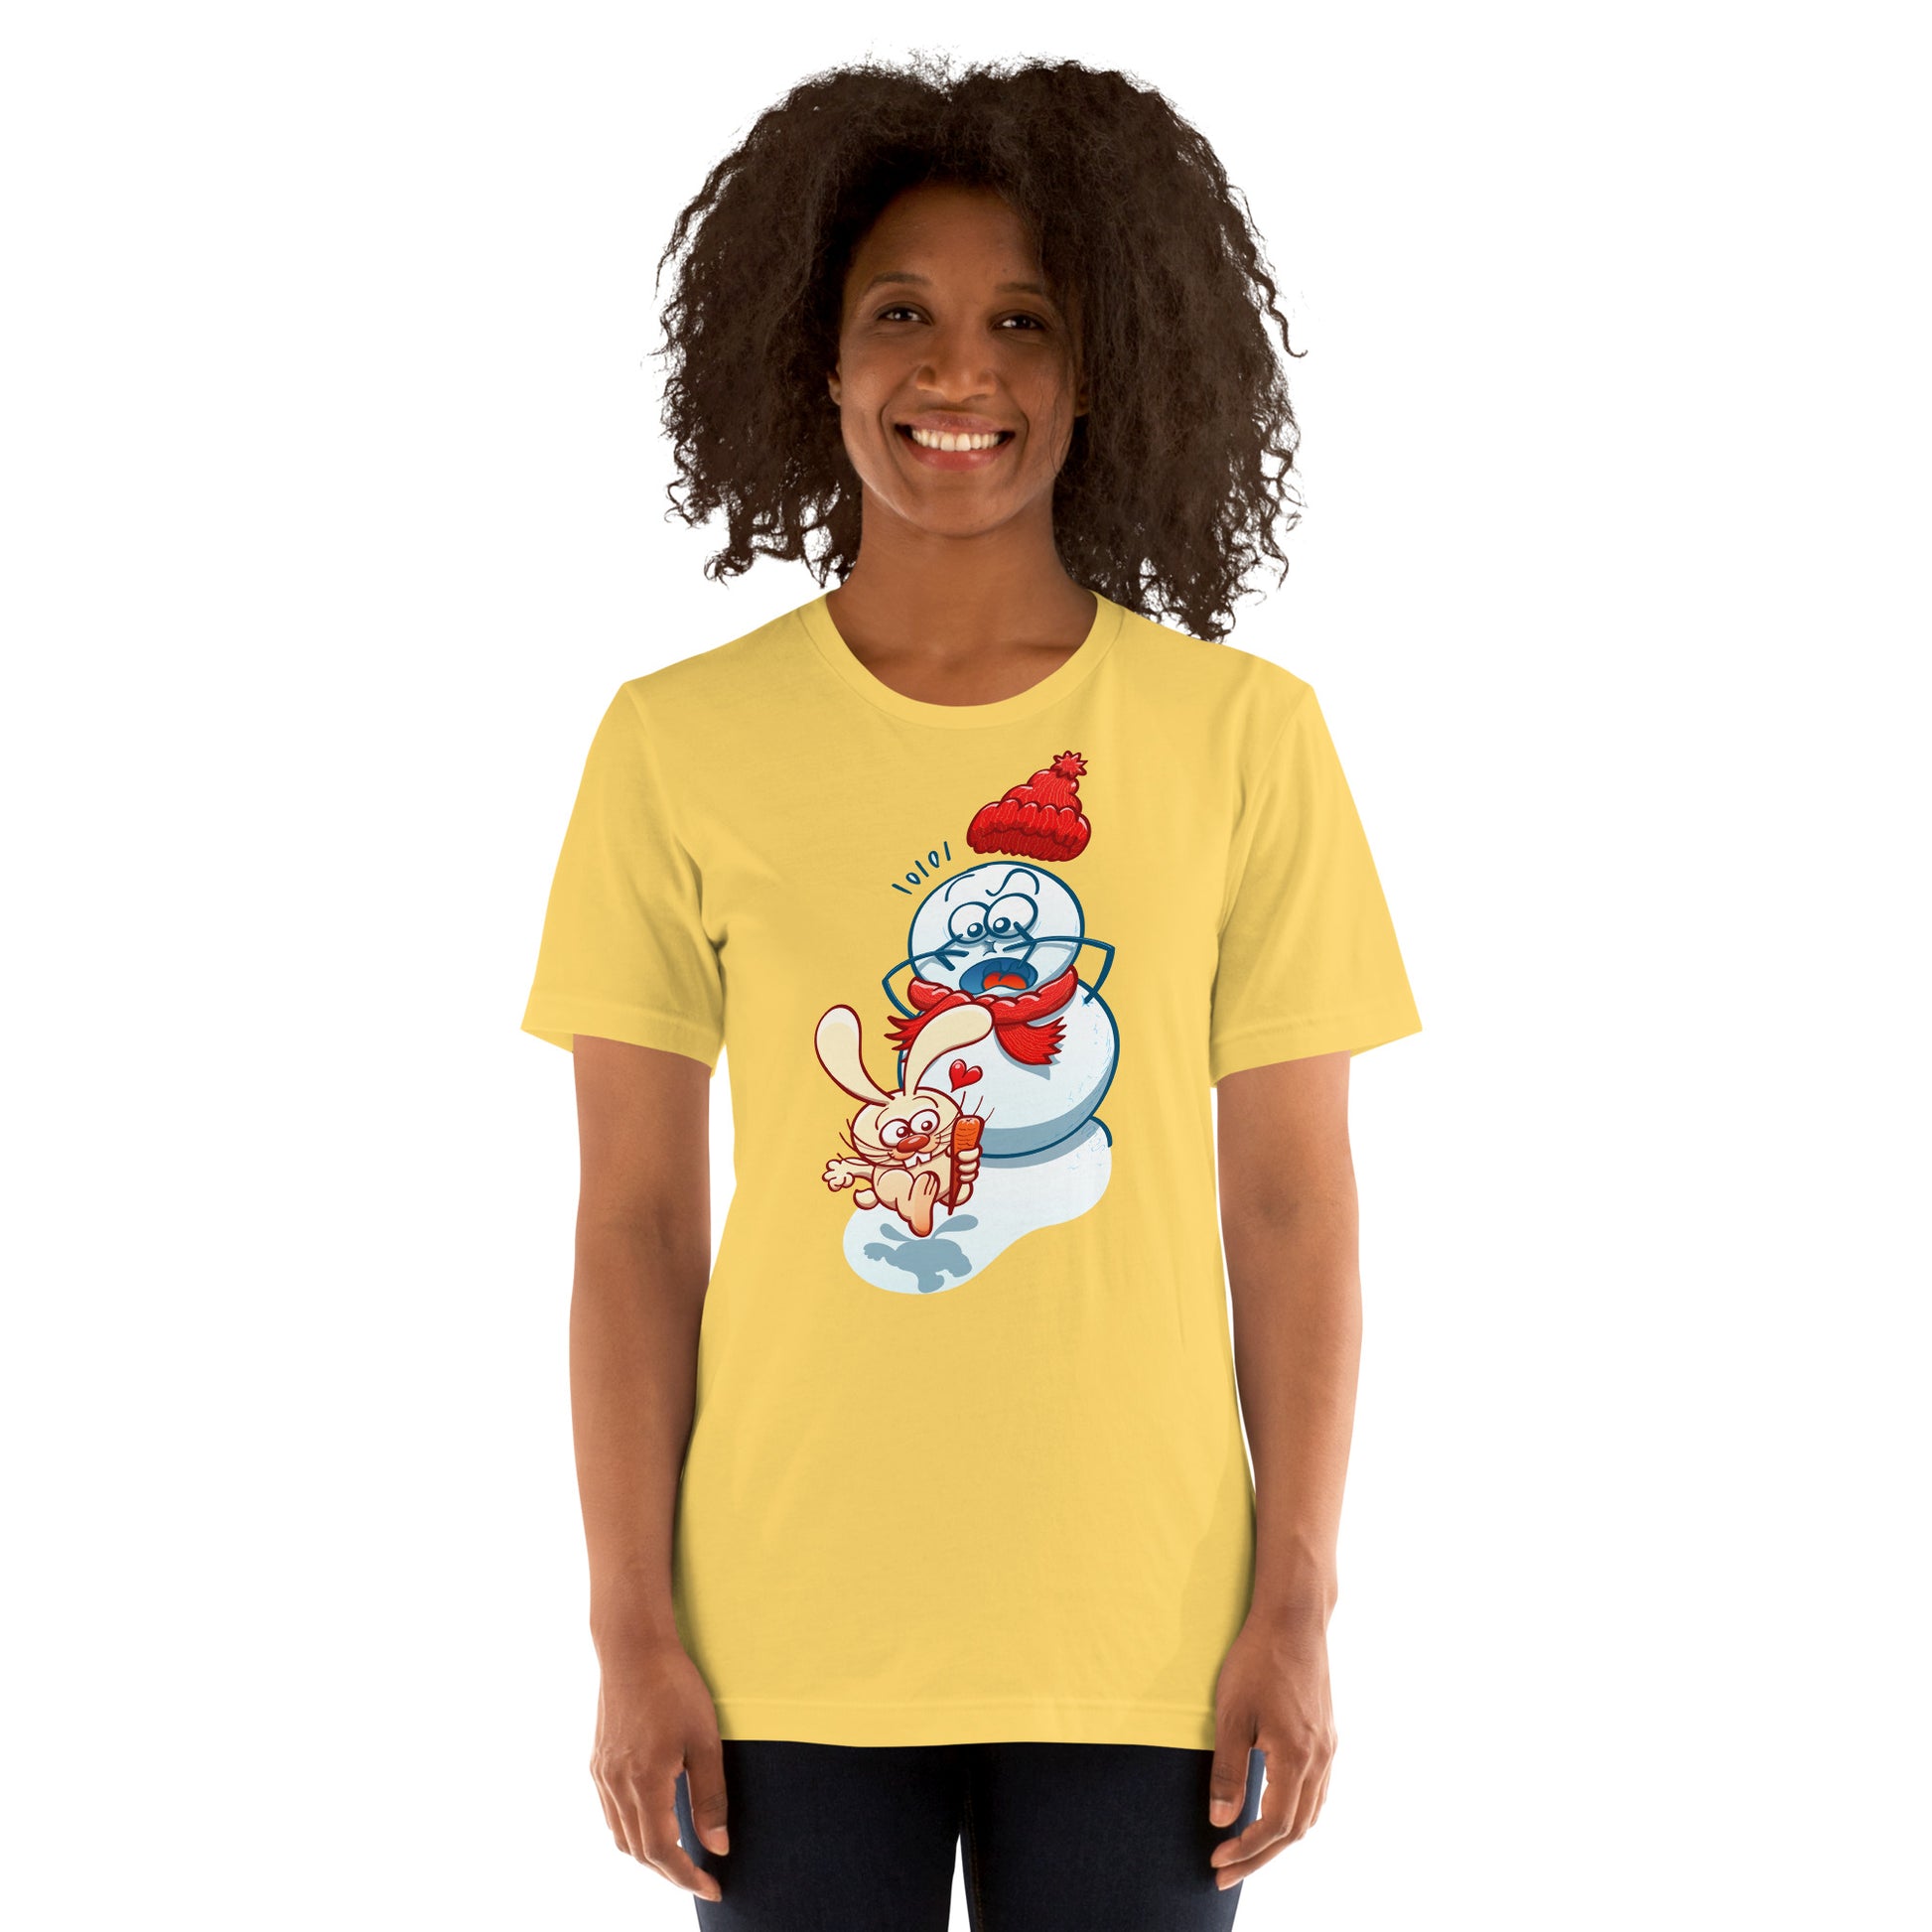 Snowman's Nose Heist: A Christmas Love Tale - Unisex t-shirt. Yellow. Overview